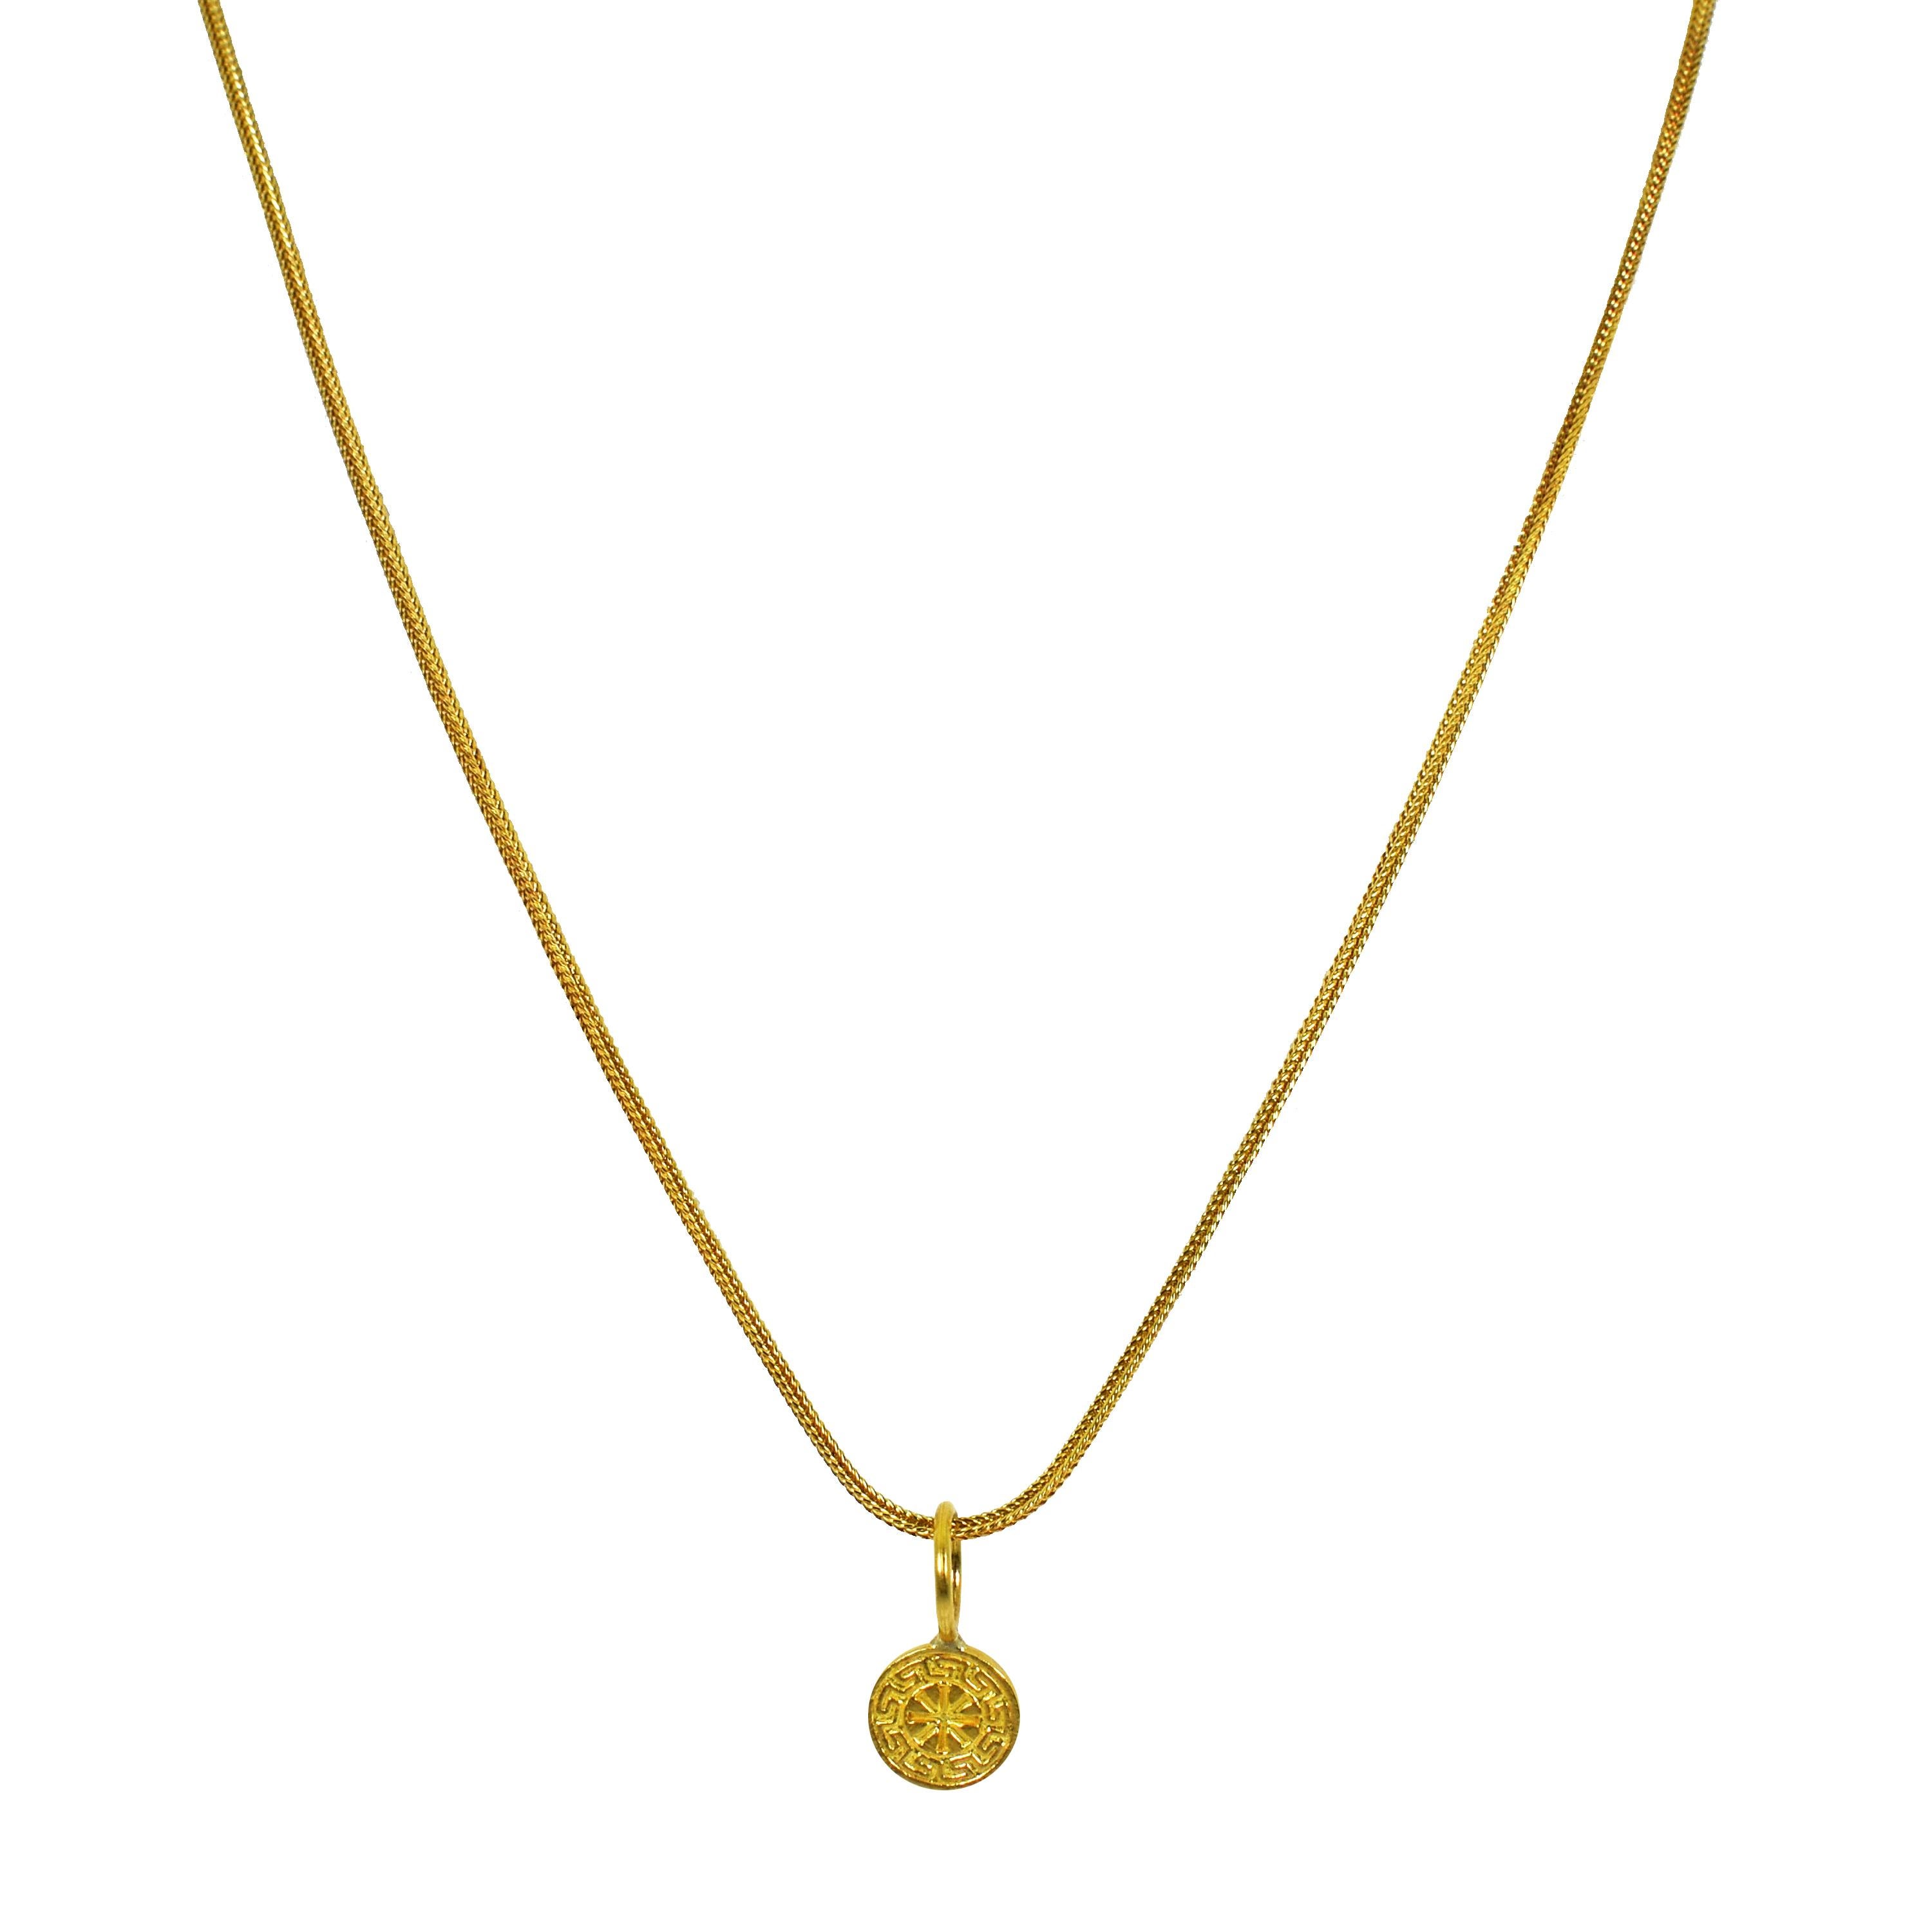 Contemporain Collier en or 22 carats avec breloque d'xthus sur chaîne en or 18 carats en vente